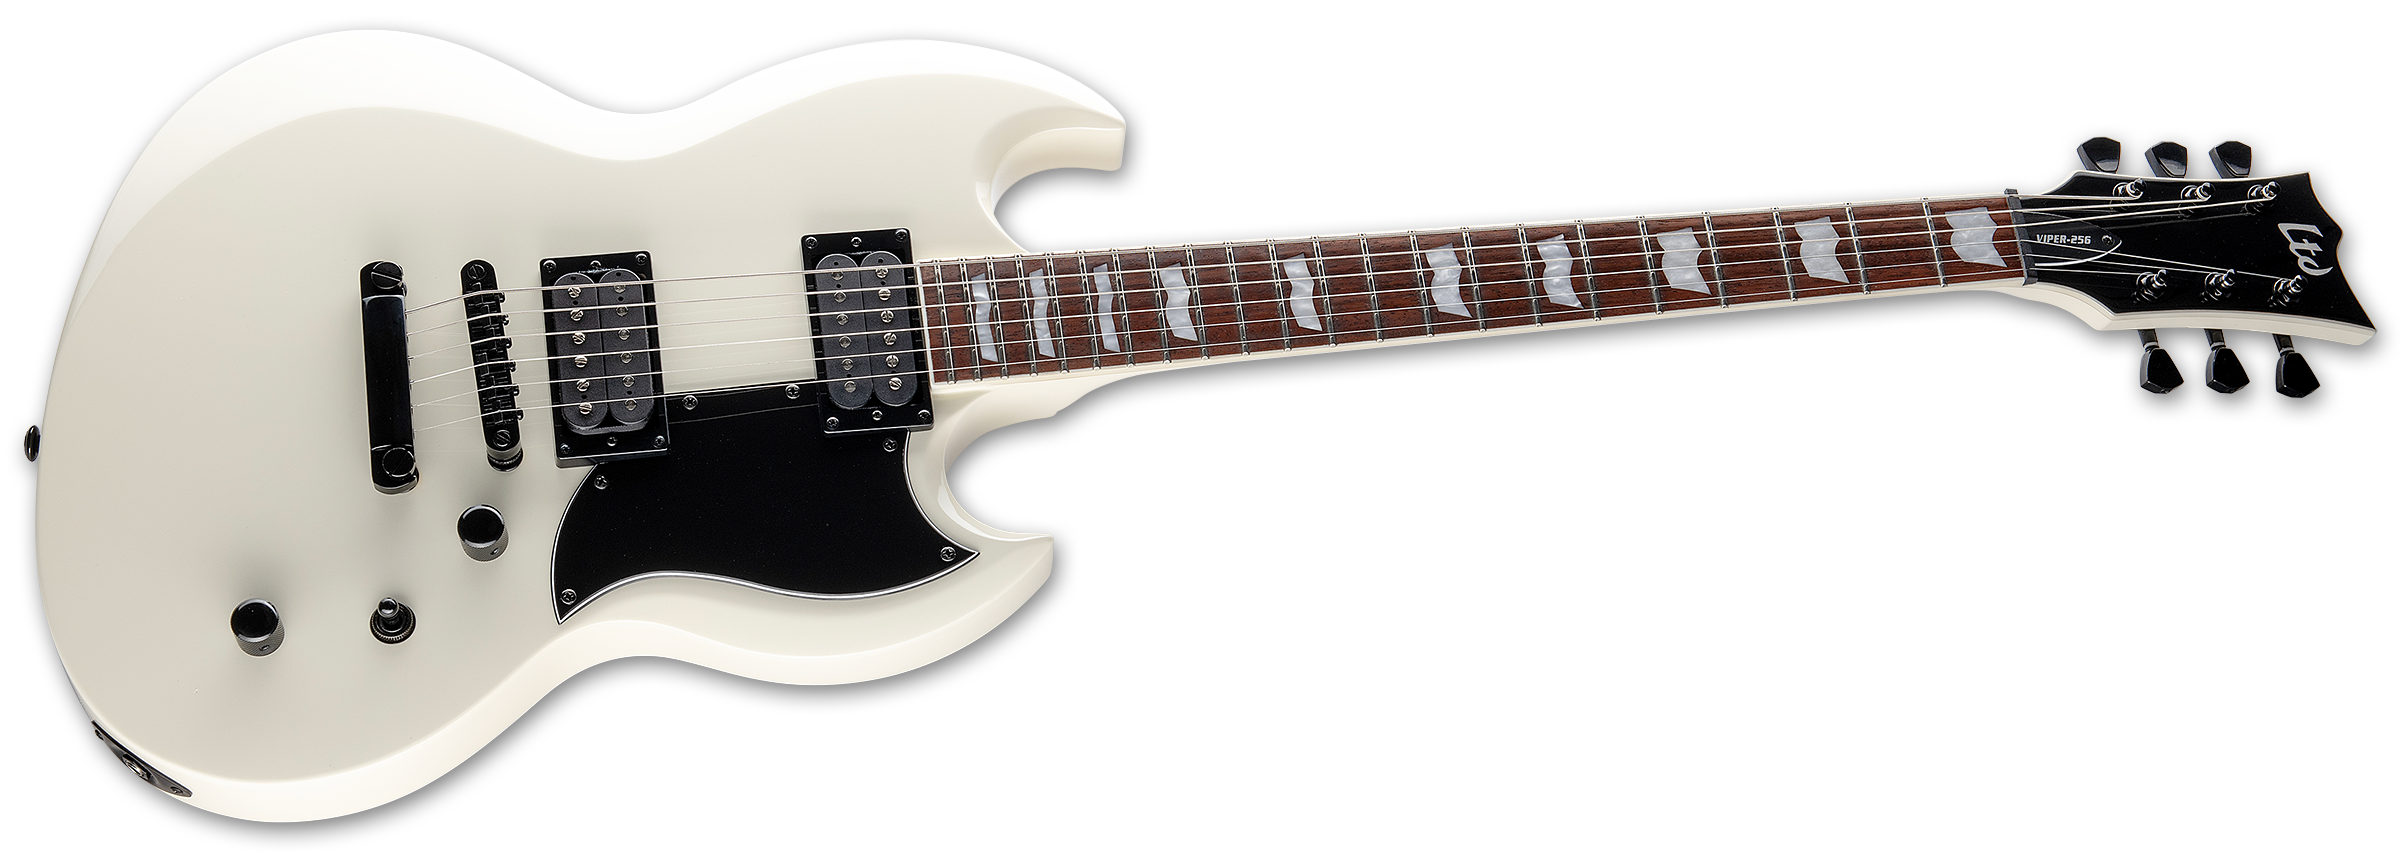 Ltd Viper-256 Hh Jat - Olympic White - Metal electric guitar - Variation 2